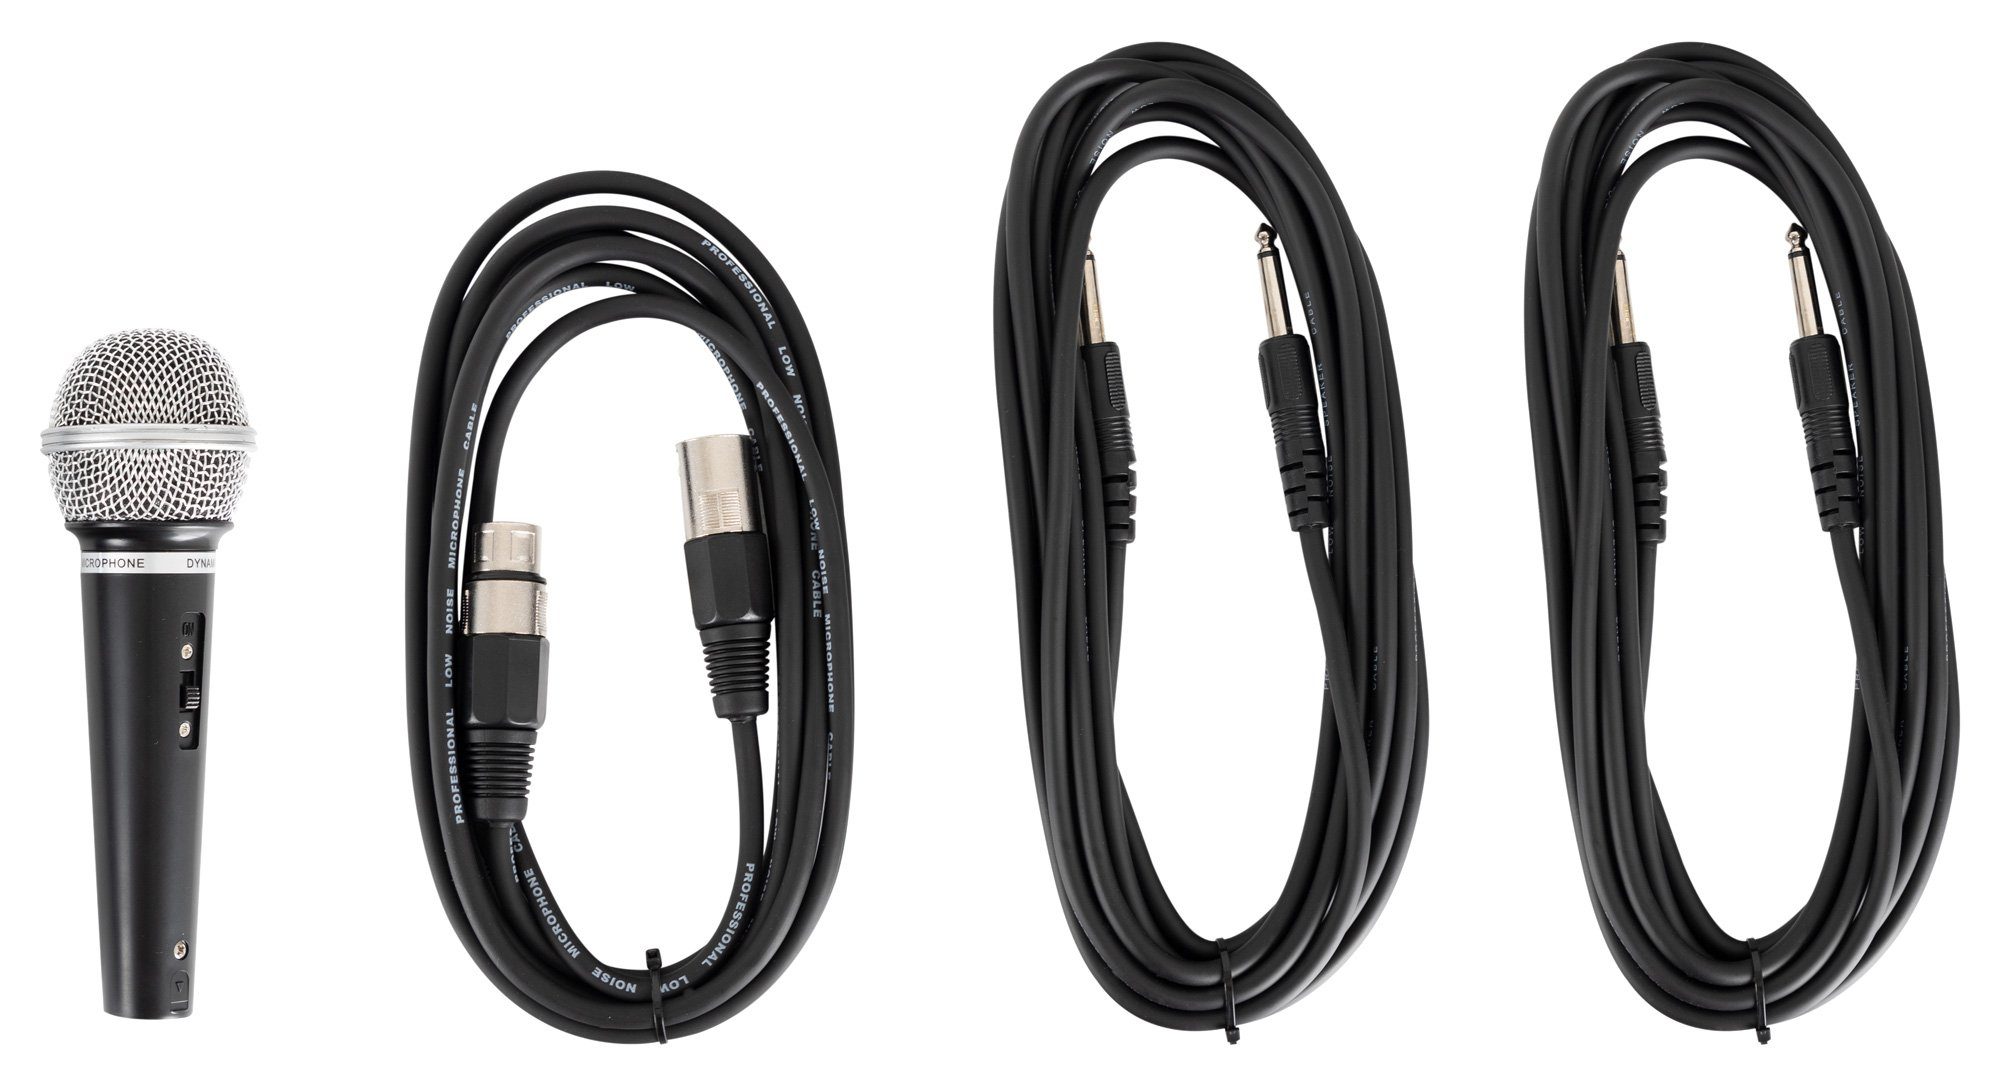 50 Kabel Lautsprechersystem USB/SD-Slot McGrey Mikrofon, 4-Kanal PA-Anlage W, & Powermixer Stative) McGrey Bandpack BP-210 100 (Bluetooth, - Watt inkl. -